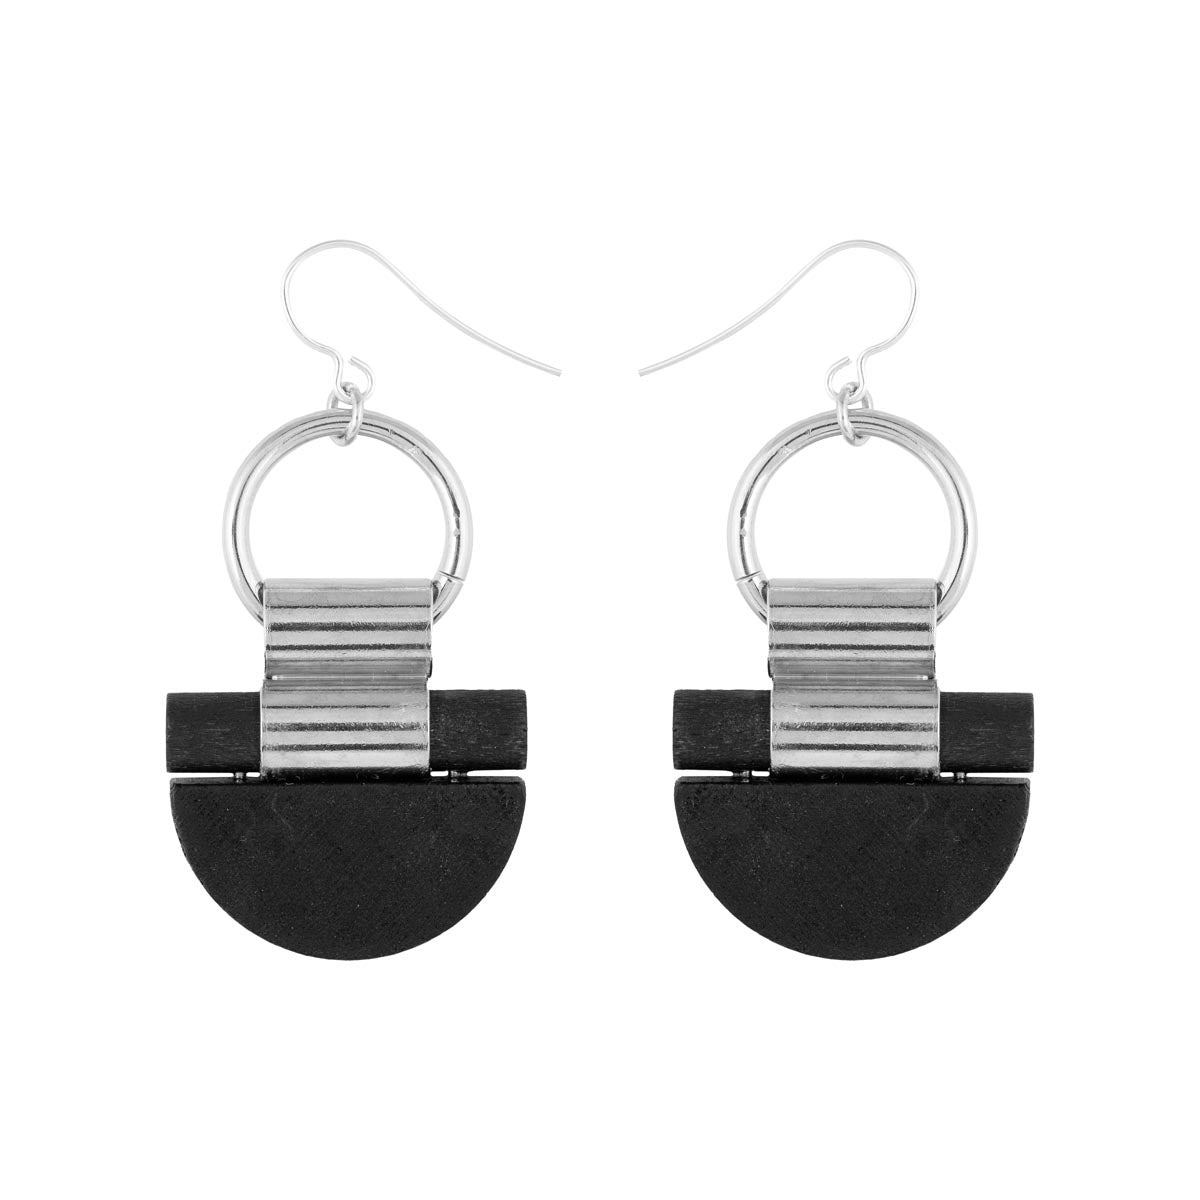 Kelohonka earrings, black and white